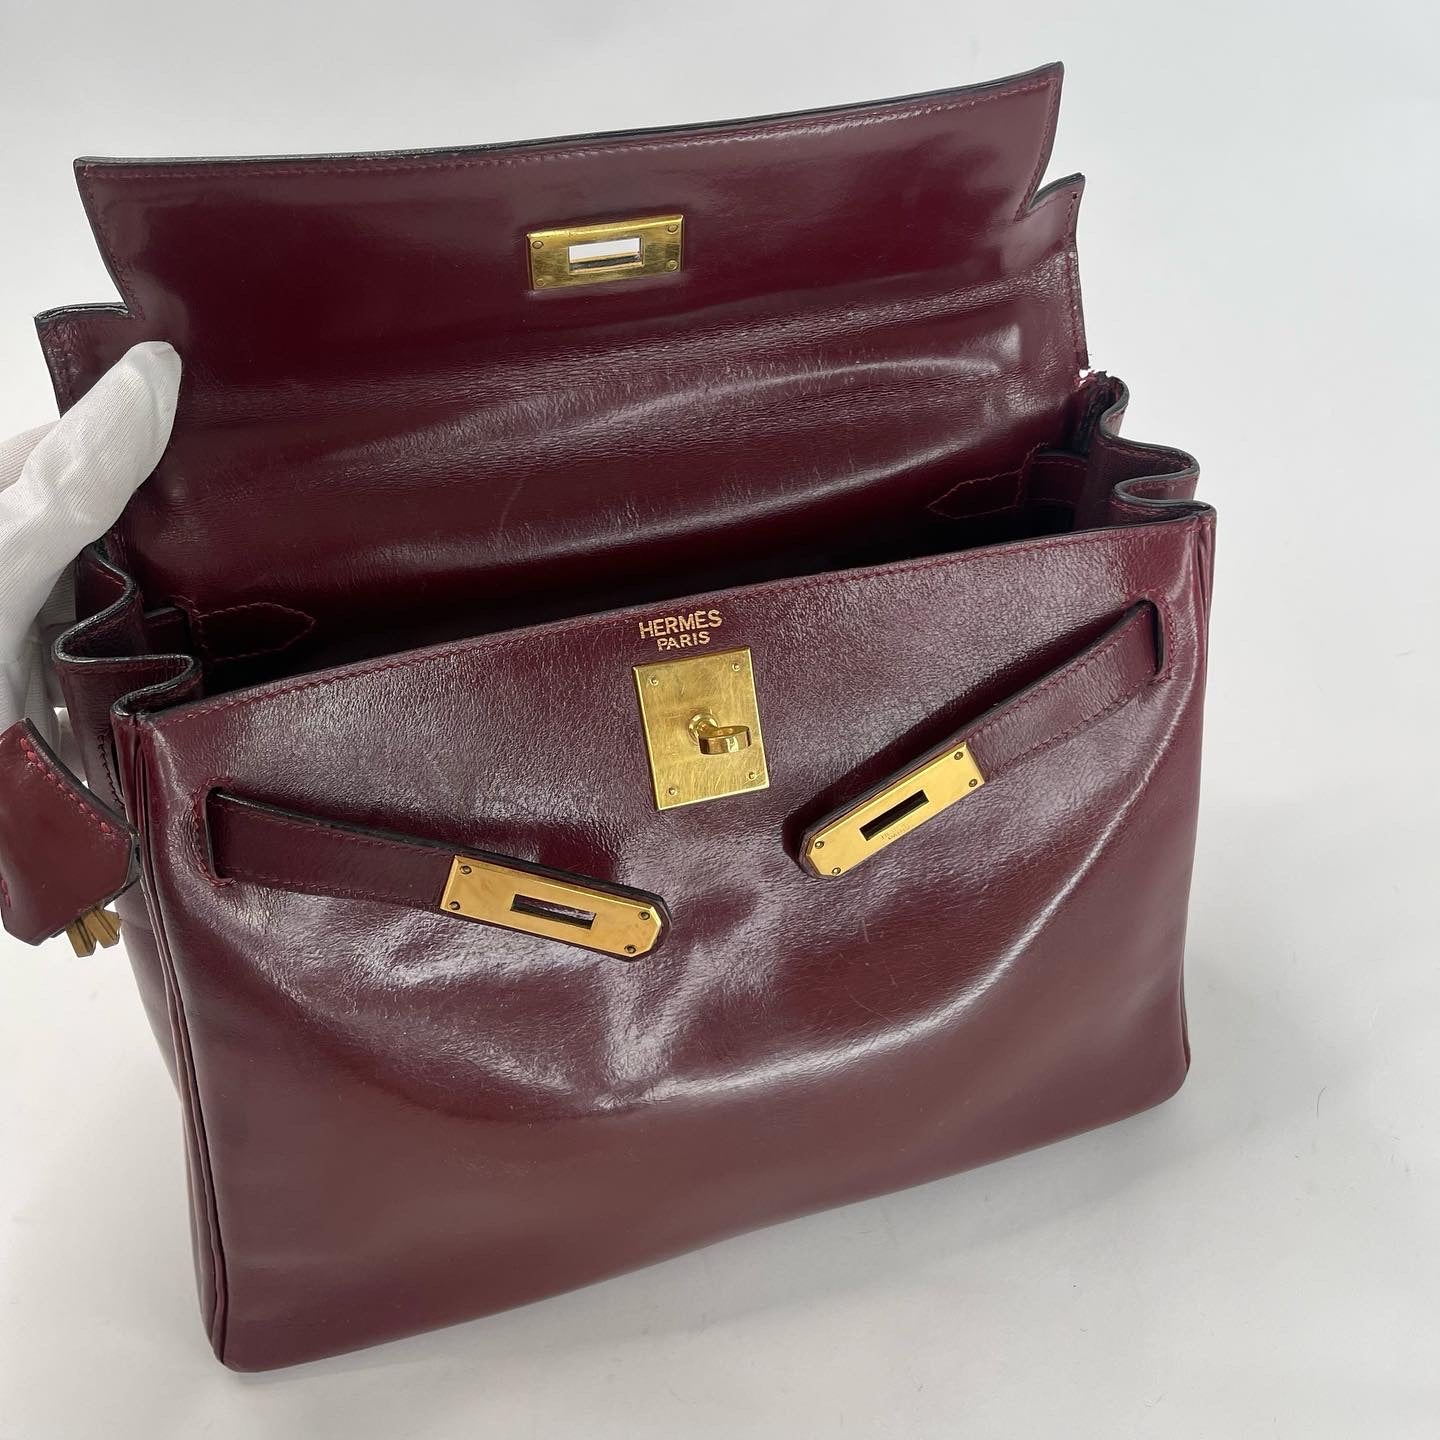 28 Kelly Retourne Bag Burgundy Box Leather